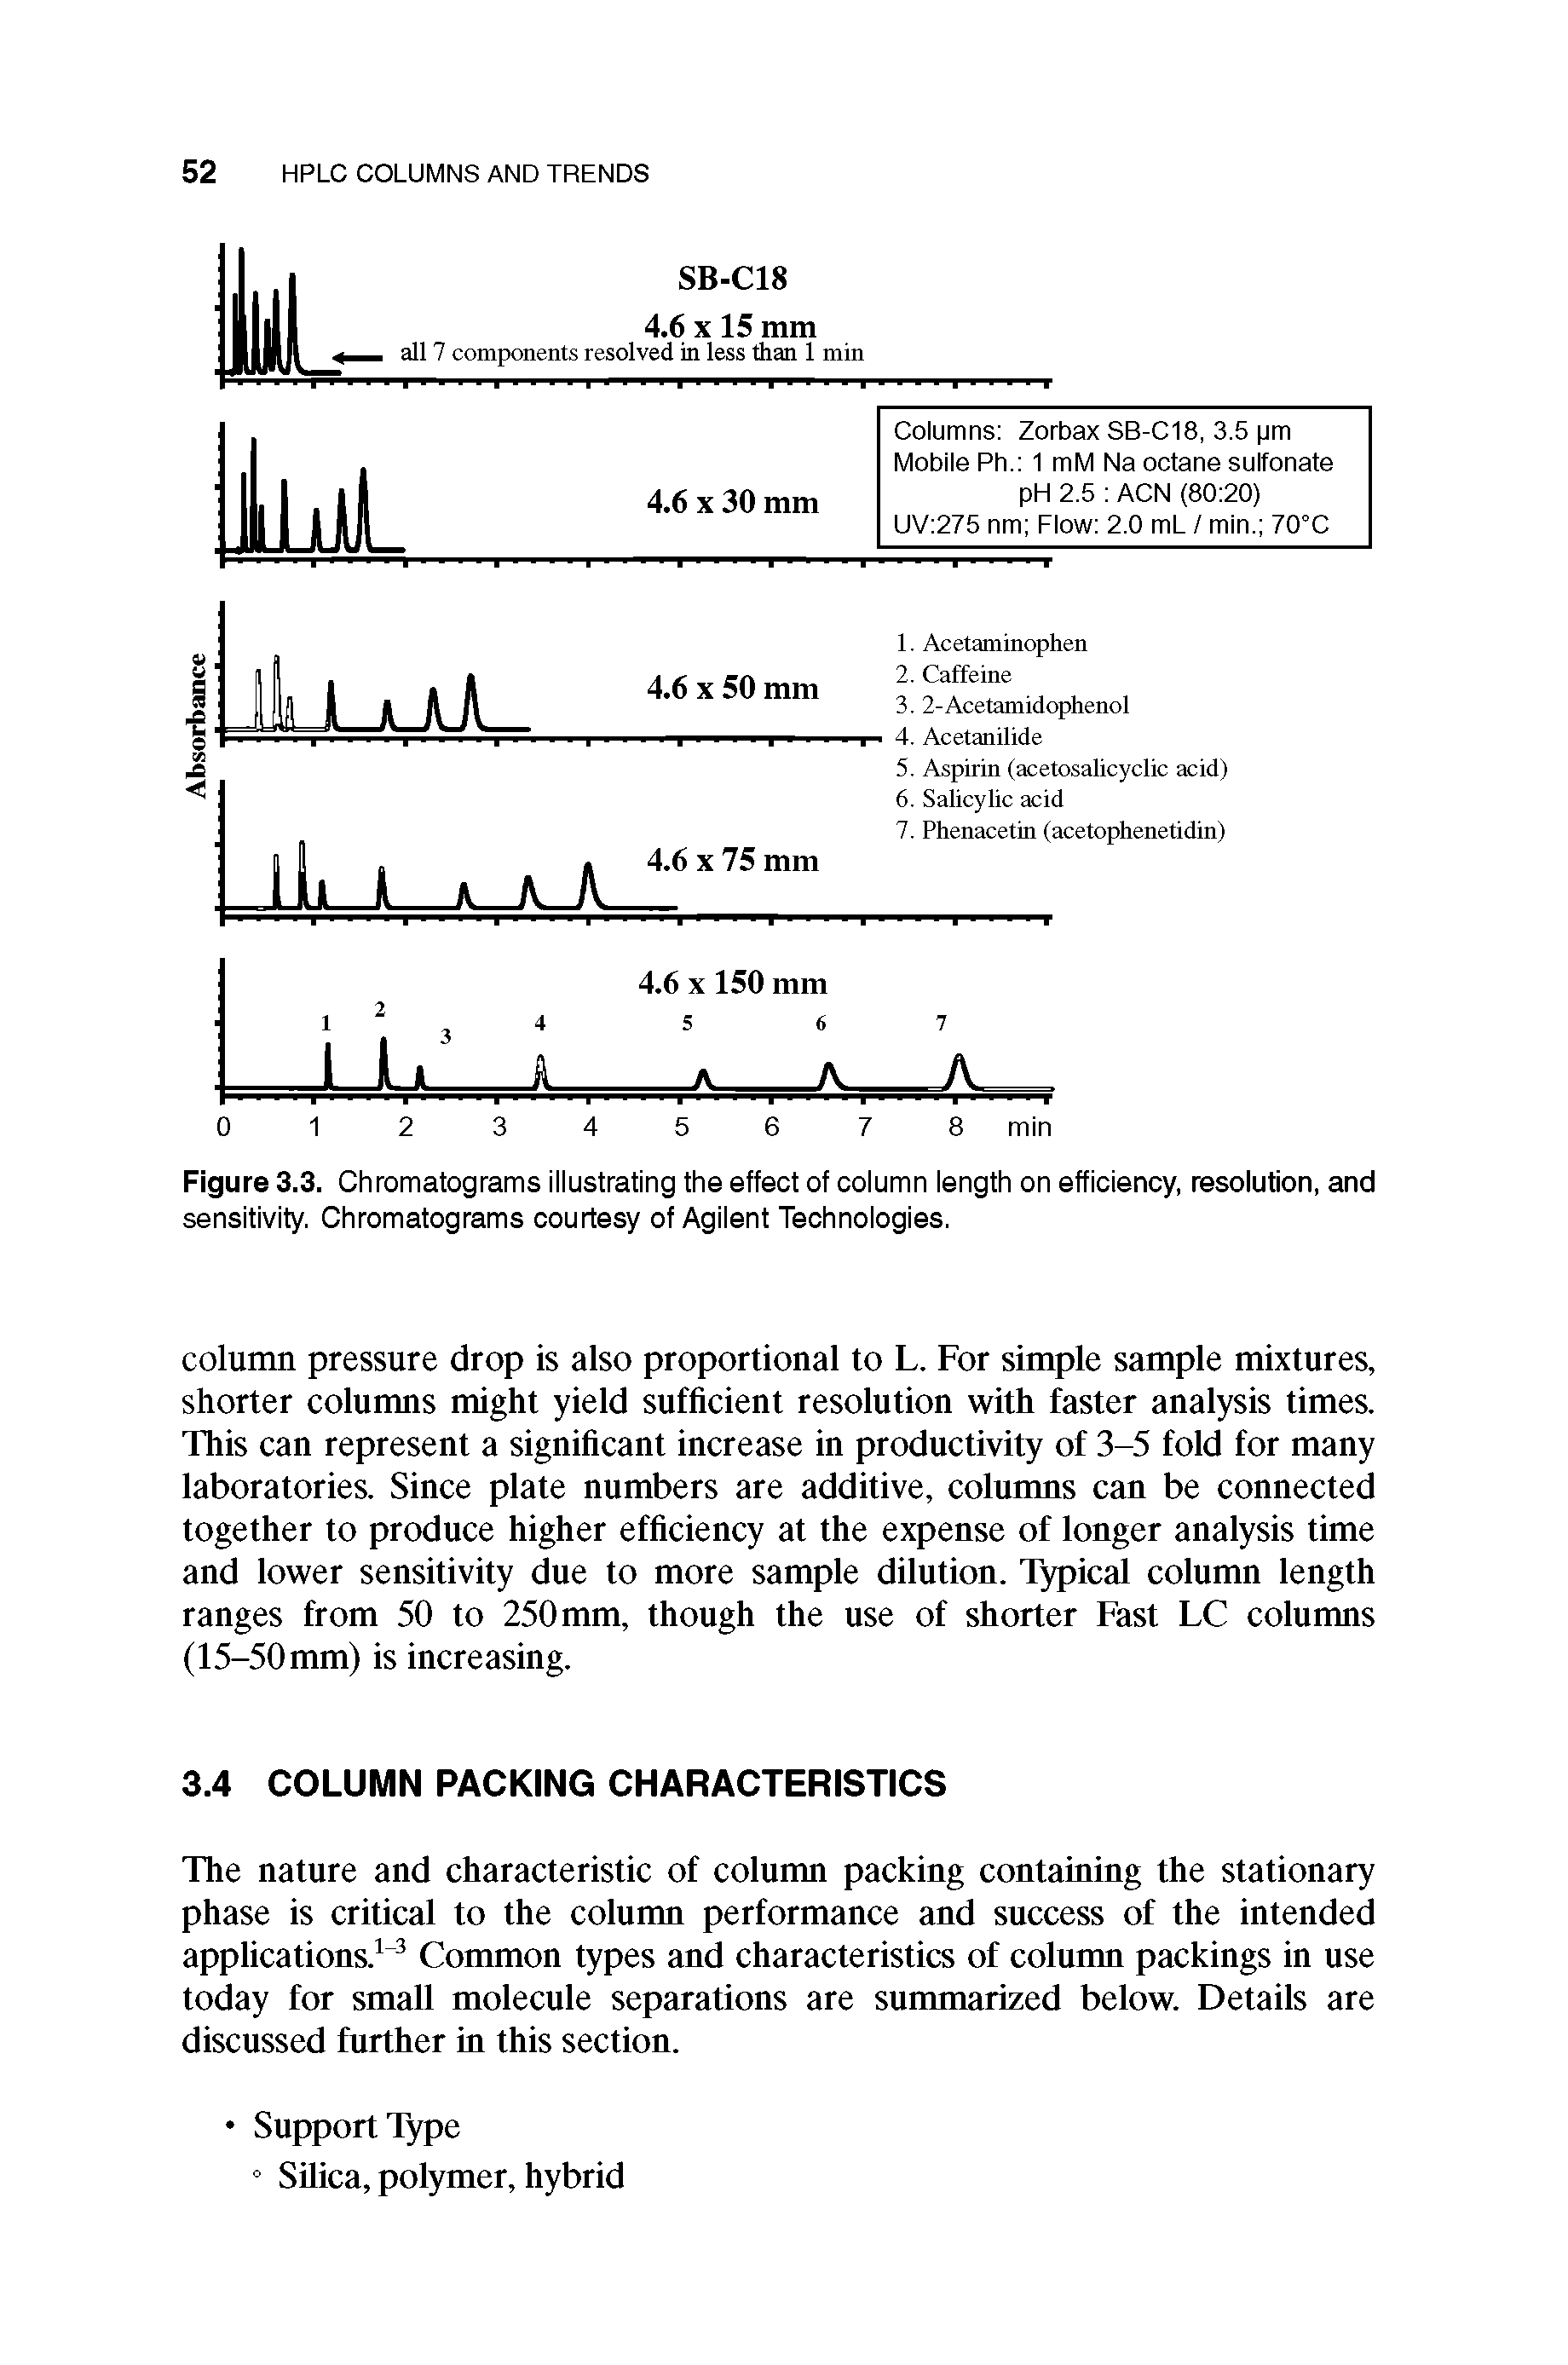 Figure 3.3. Chromatograms illustrating the effect of column length on efficiency, resolution, and sensitivity. Chromatograms courtesy of Agilent Technologies.